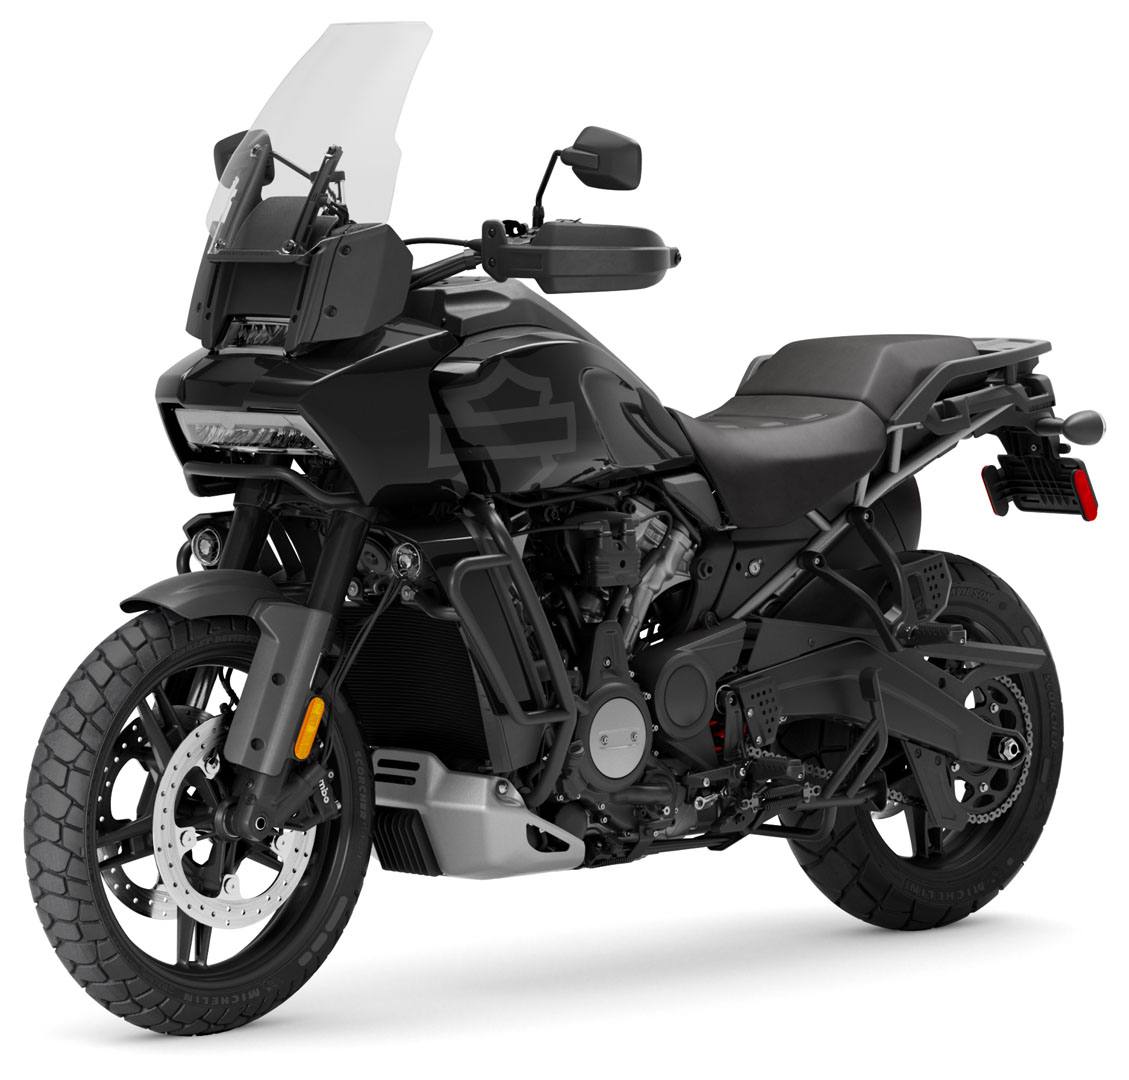 New 2021 Harley Davidson Pan America Special Motorcycles In Cortland Oh Vivid Black